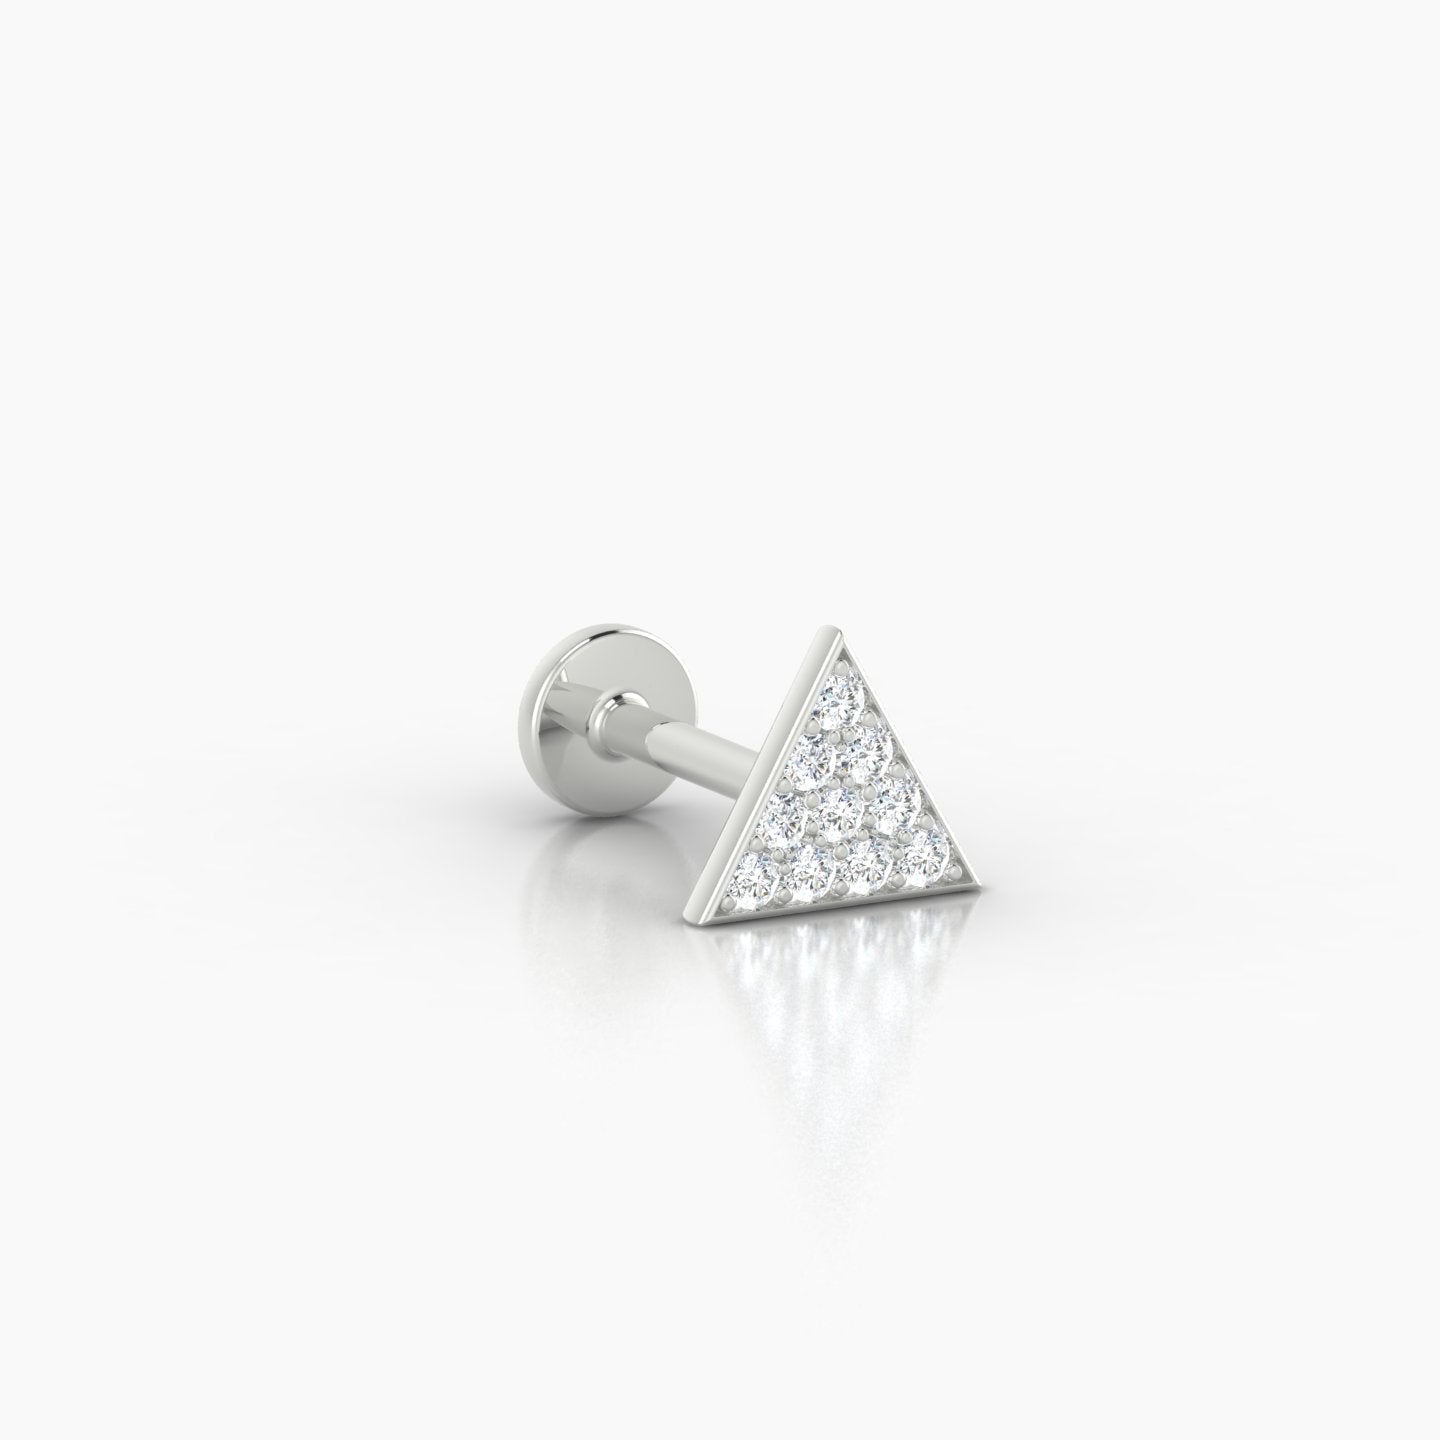 Hermione | 18k White Gold 2 mm Trillion Diamond Piercing